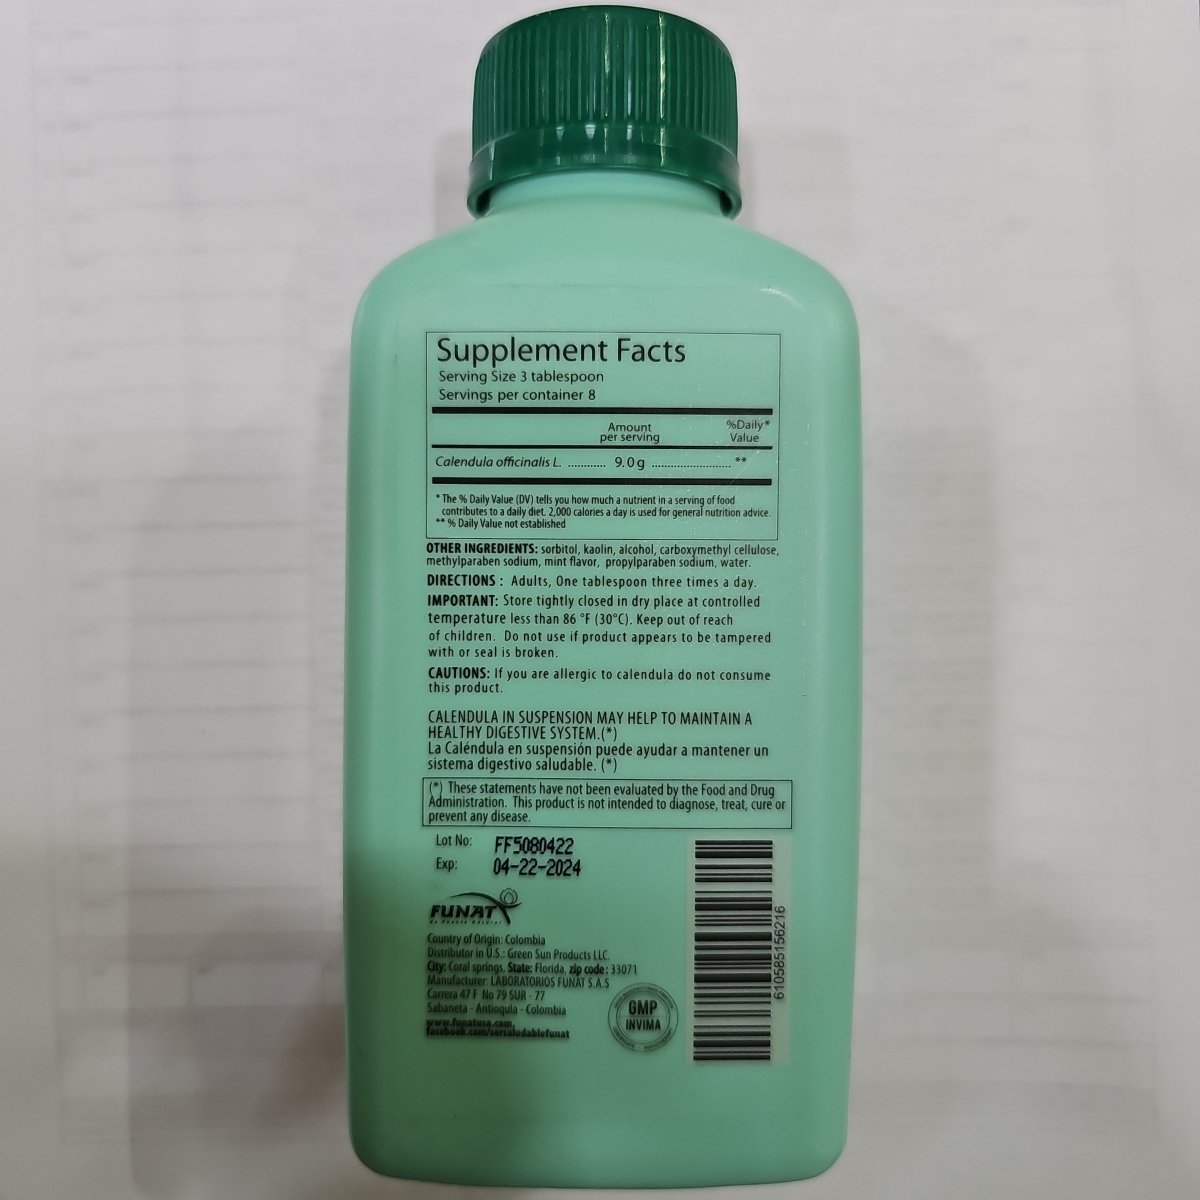 Antaxid: Caléndula + Kaolin + Mint - Reflujo Ocasional y Acidez Estomacal - 12oz